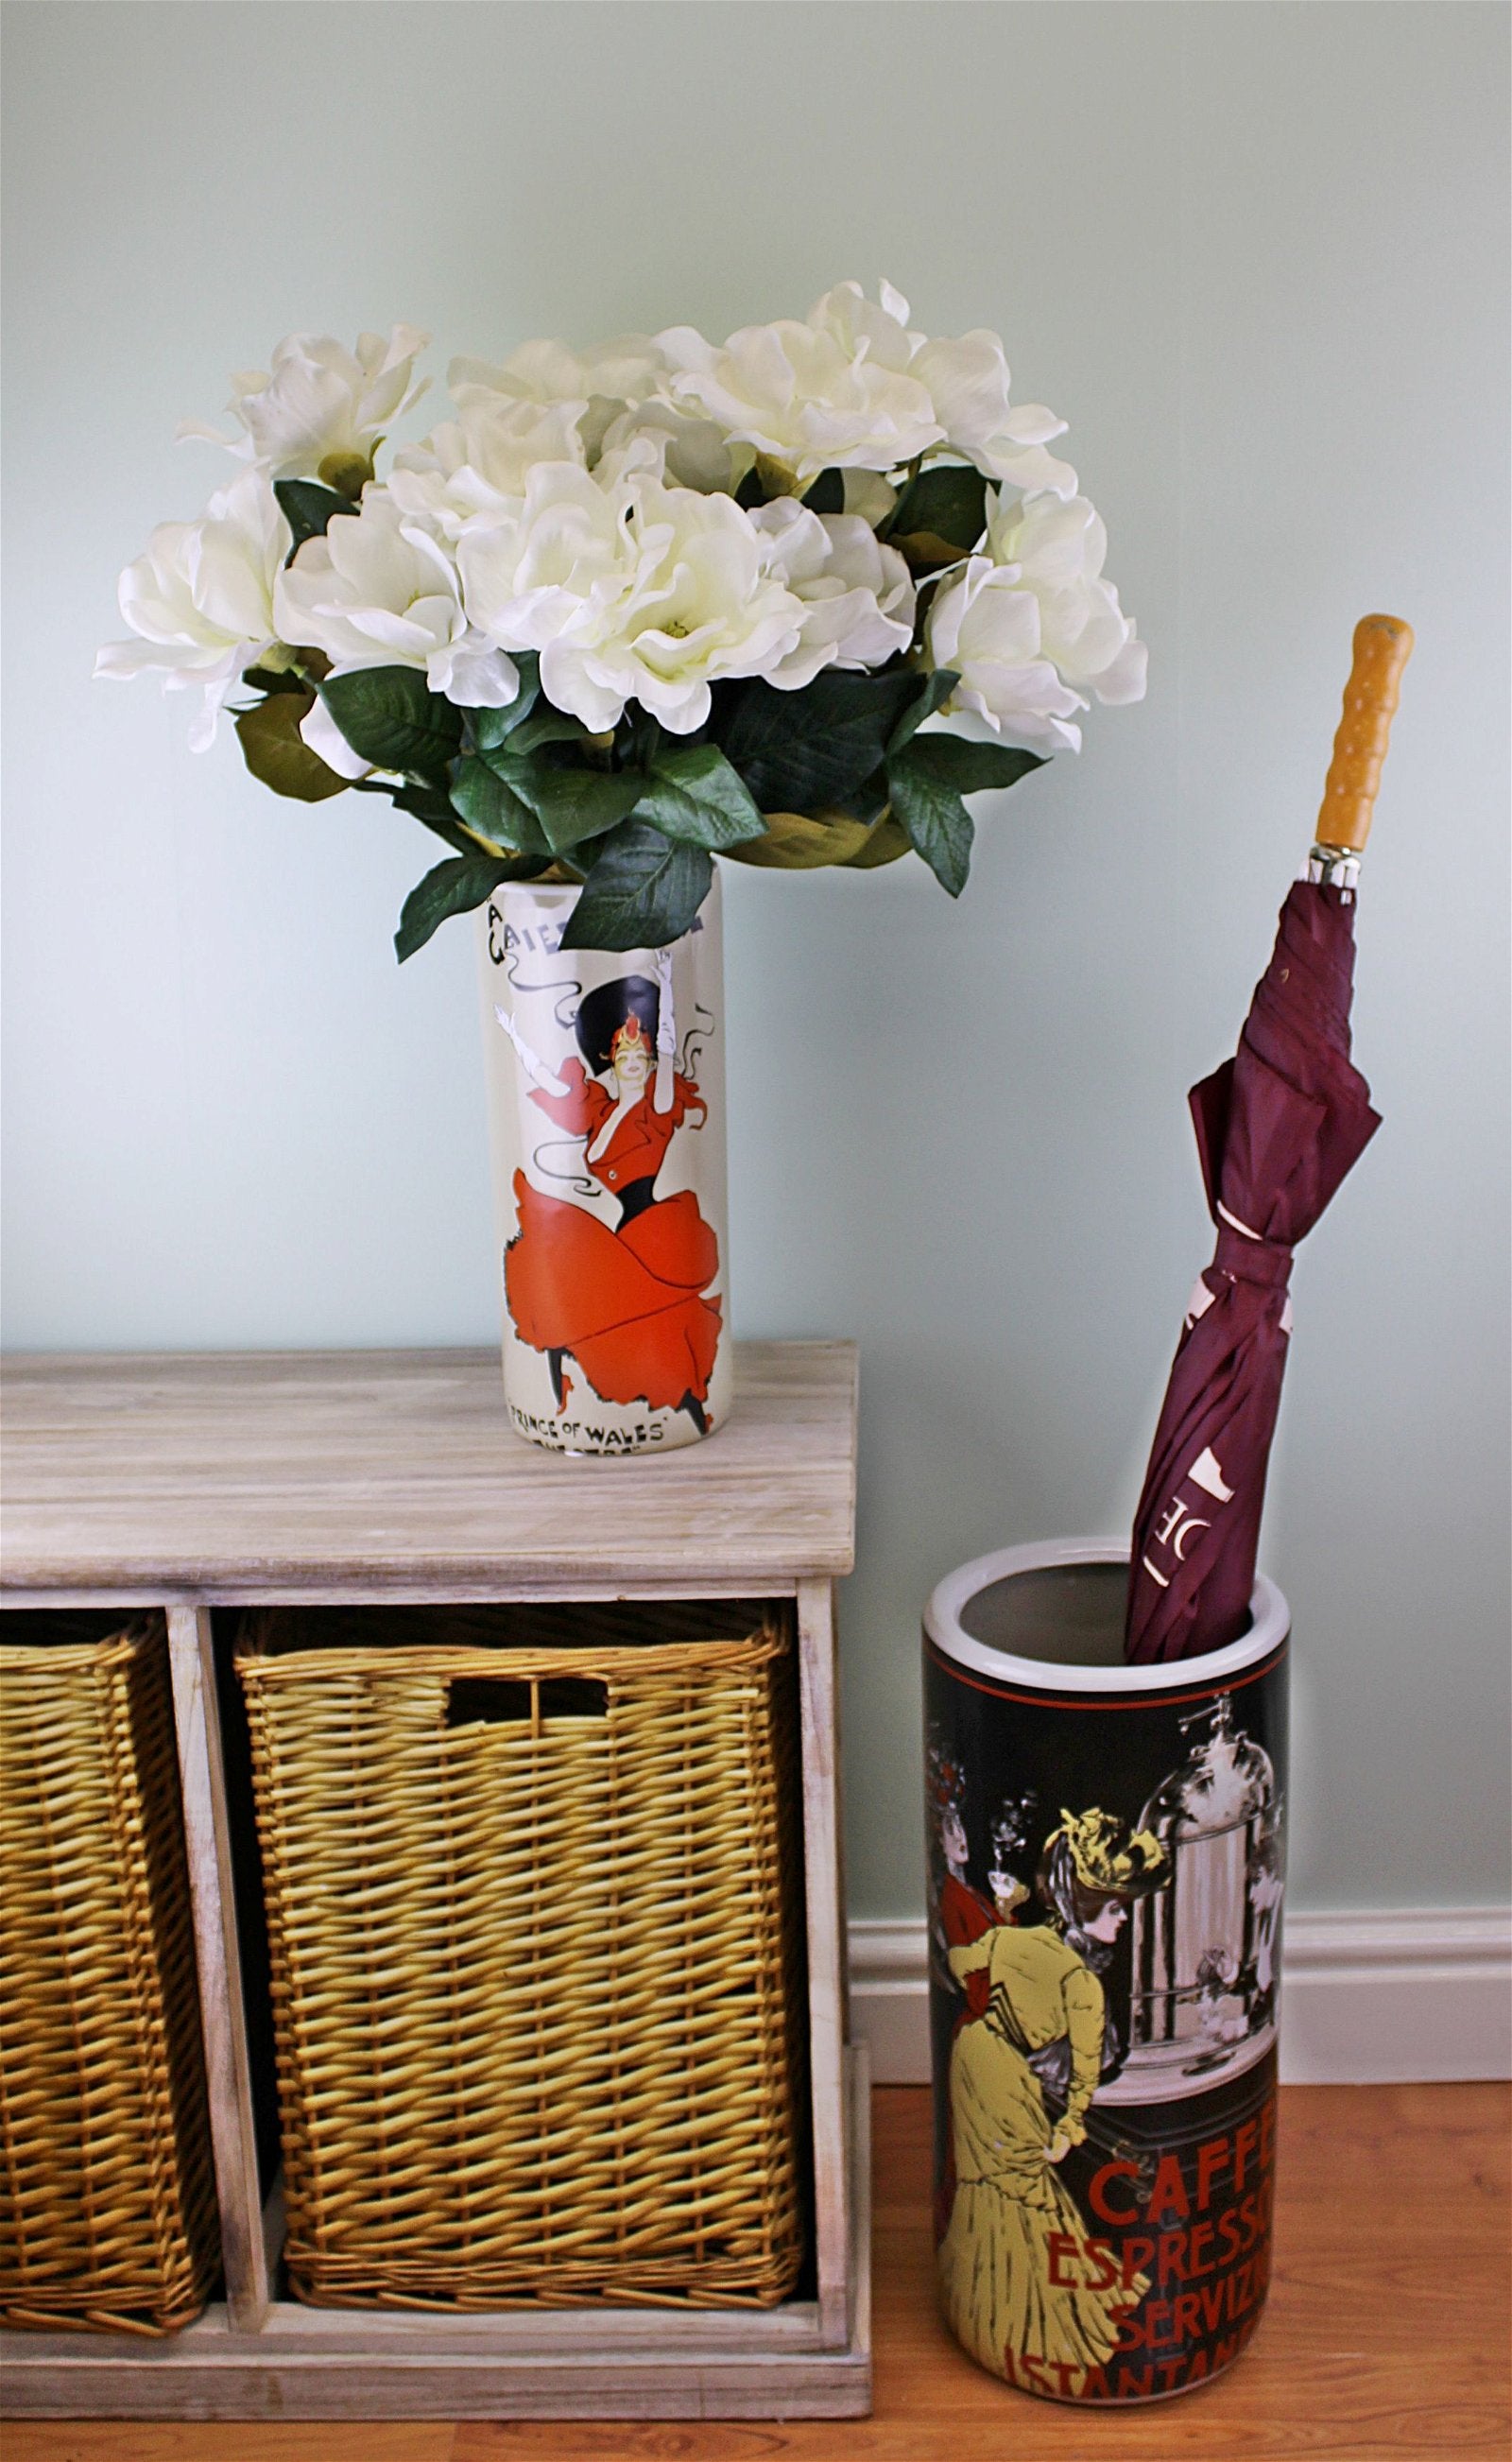 Umbrella Stand, Caffe Espresso Design With Free Vase